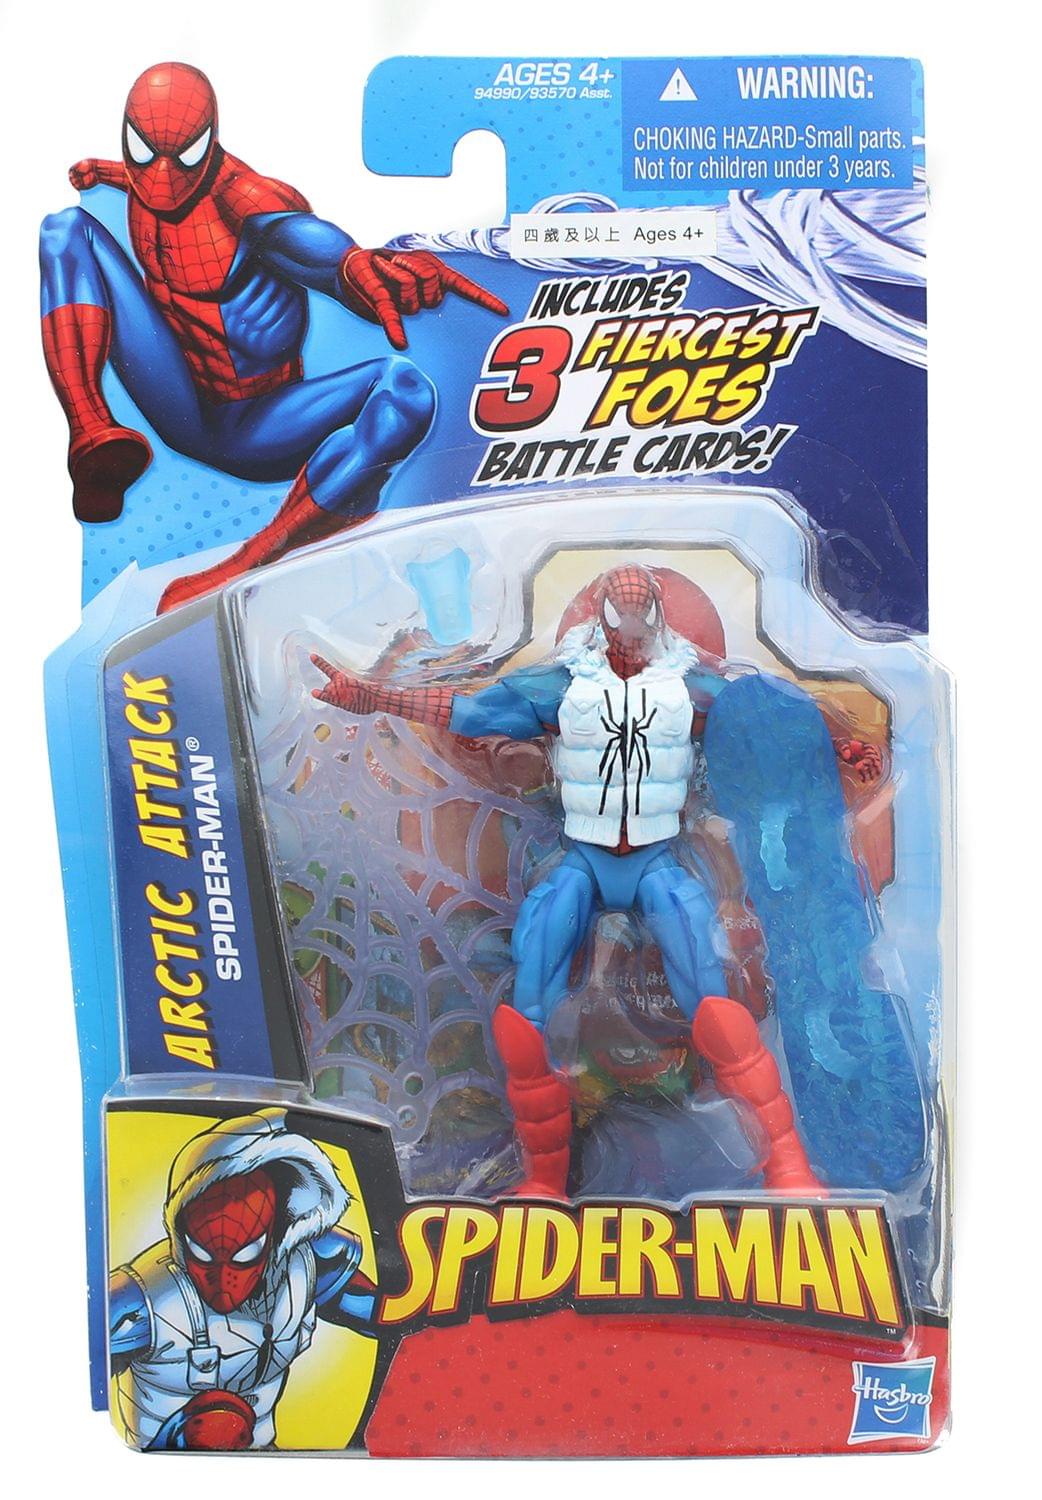 Marvel Legends Retro Collection Spider-Man - Amazing Fantasy 3.75